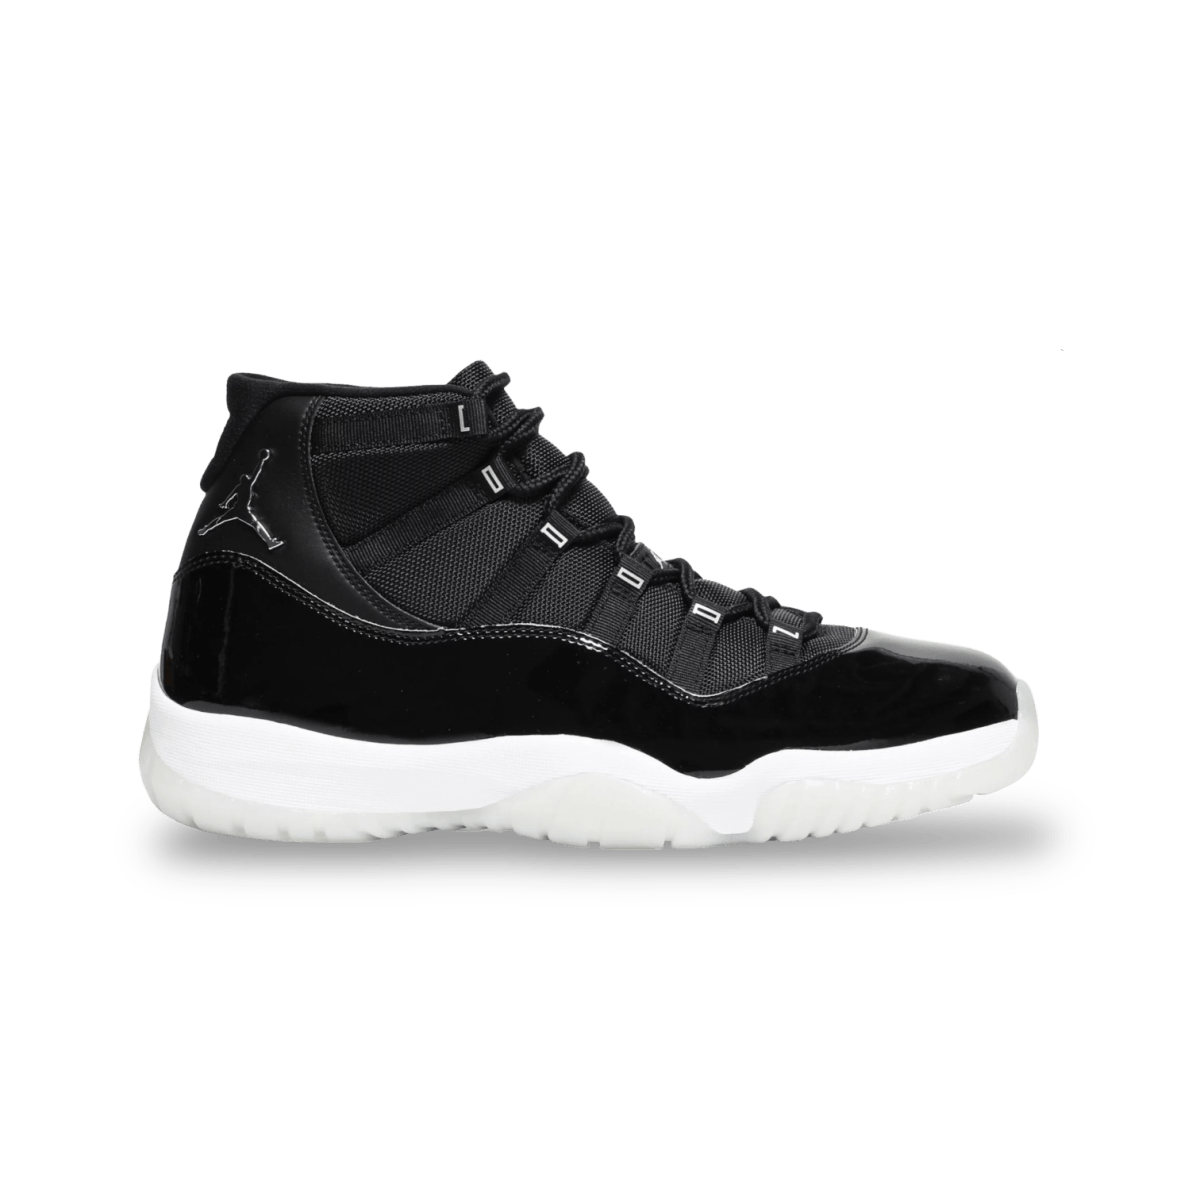 Air Jordan 11 Retro 'Jubilee / 25th Anniversary' Black - High Sneaker - Jawns on Fire Sneakers & Streetwear